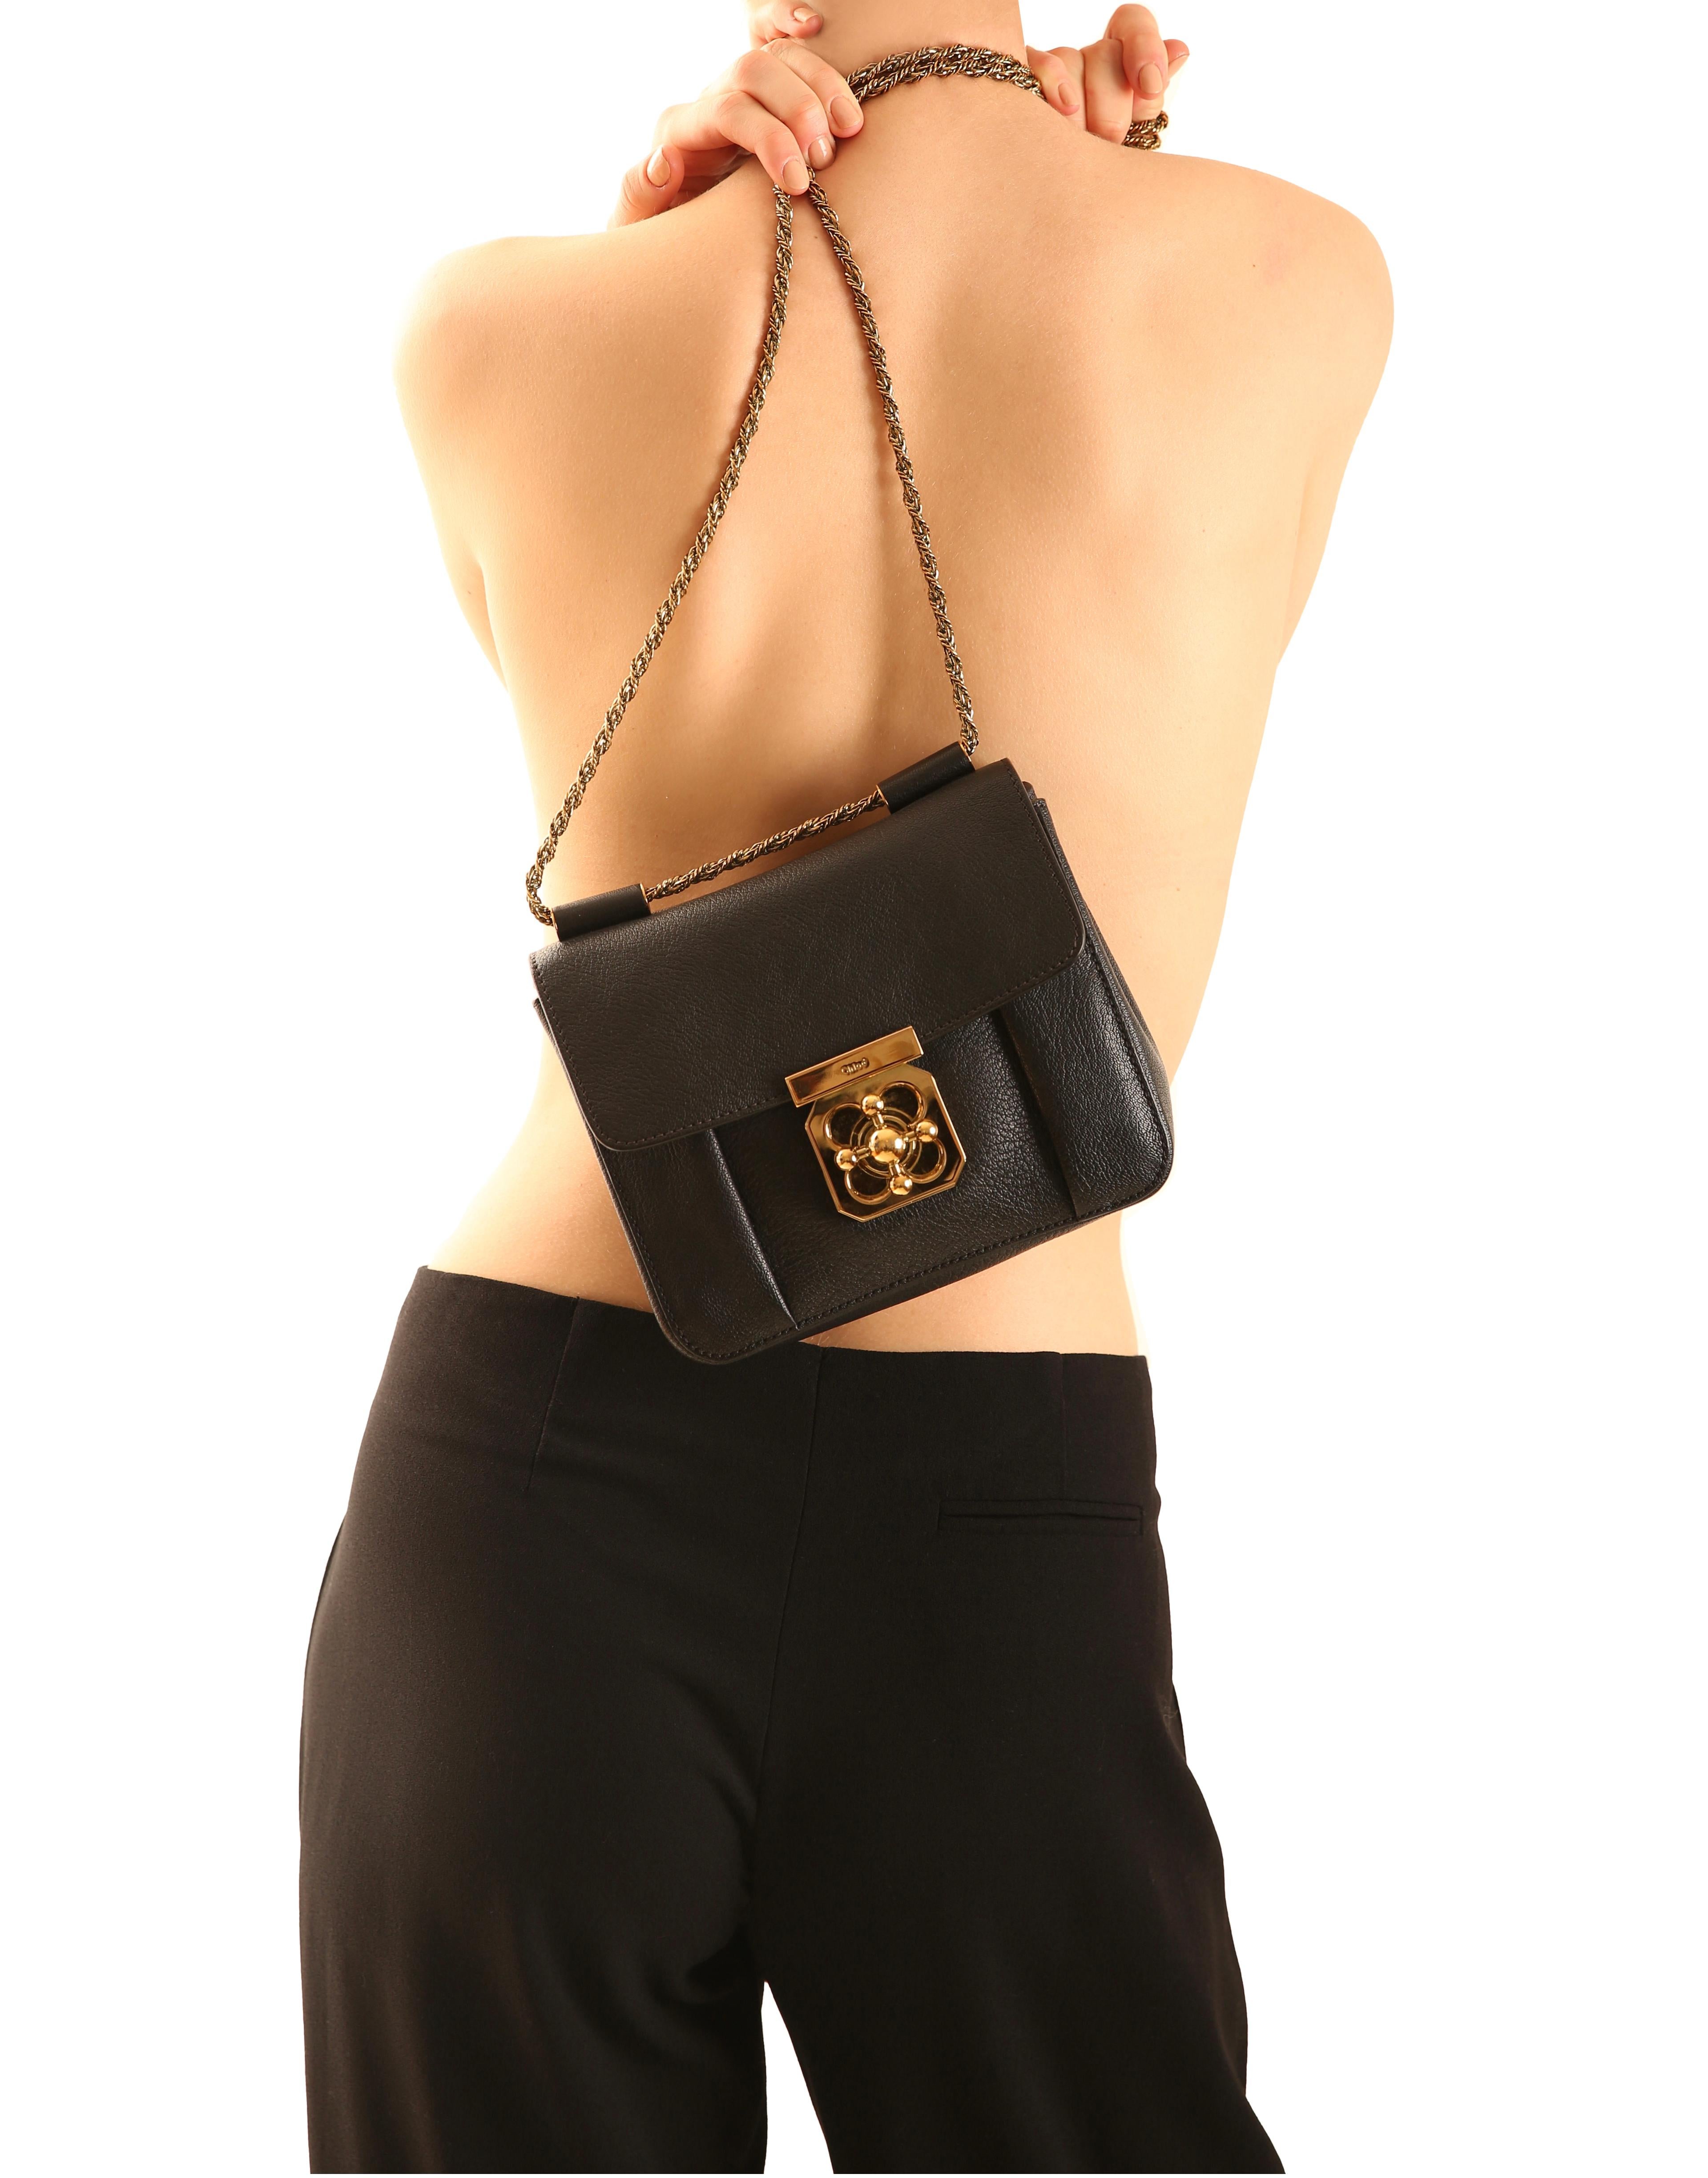 Black Chloe Elise black small gold chain grained leather shoulder bag clutch For Sale